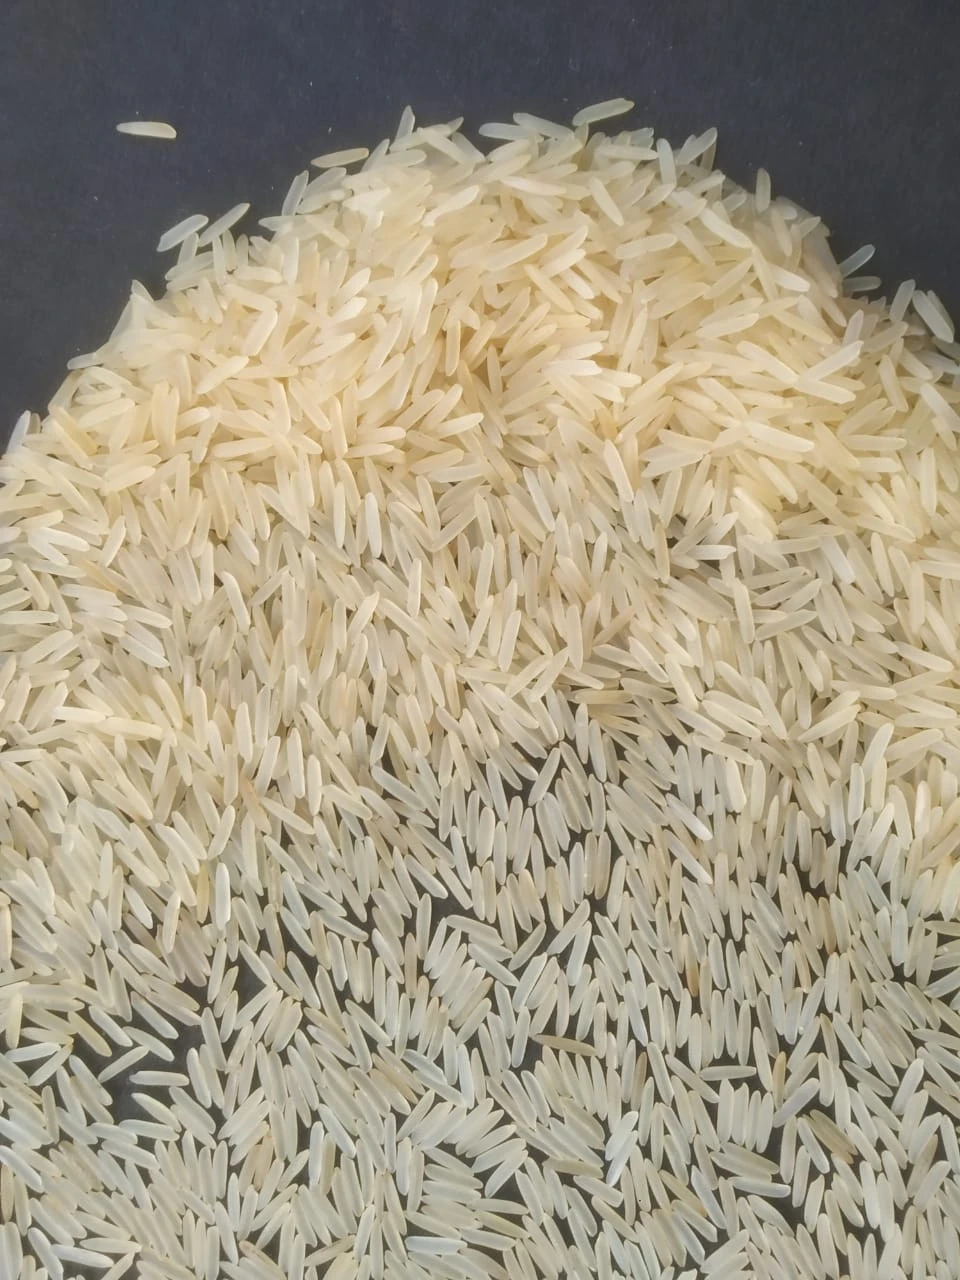 1121 White Sella Basmati Rice for Export Quality (1121 Creamy White Sella basmati Rice)